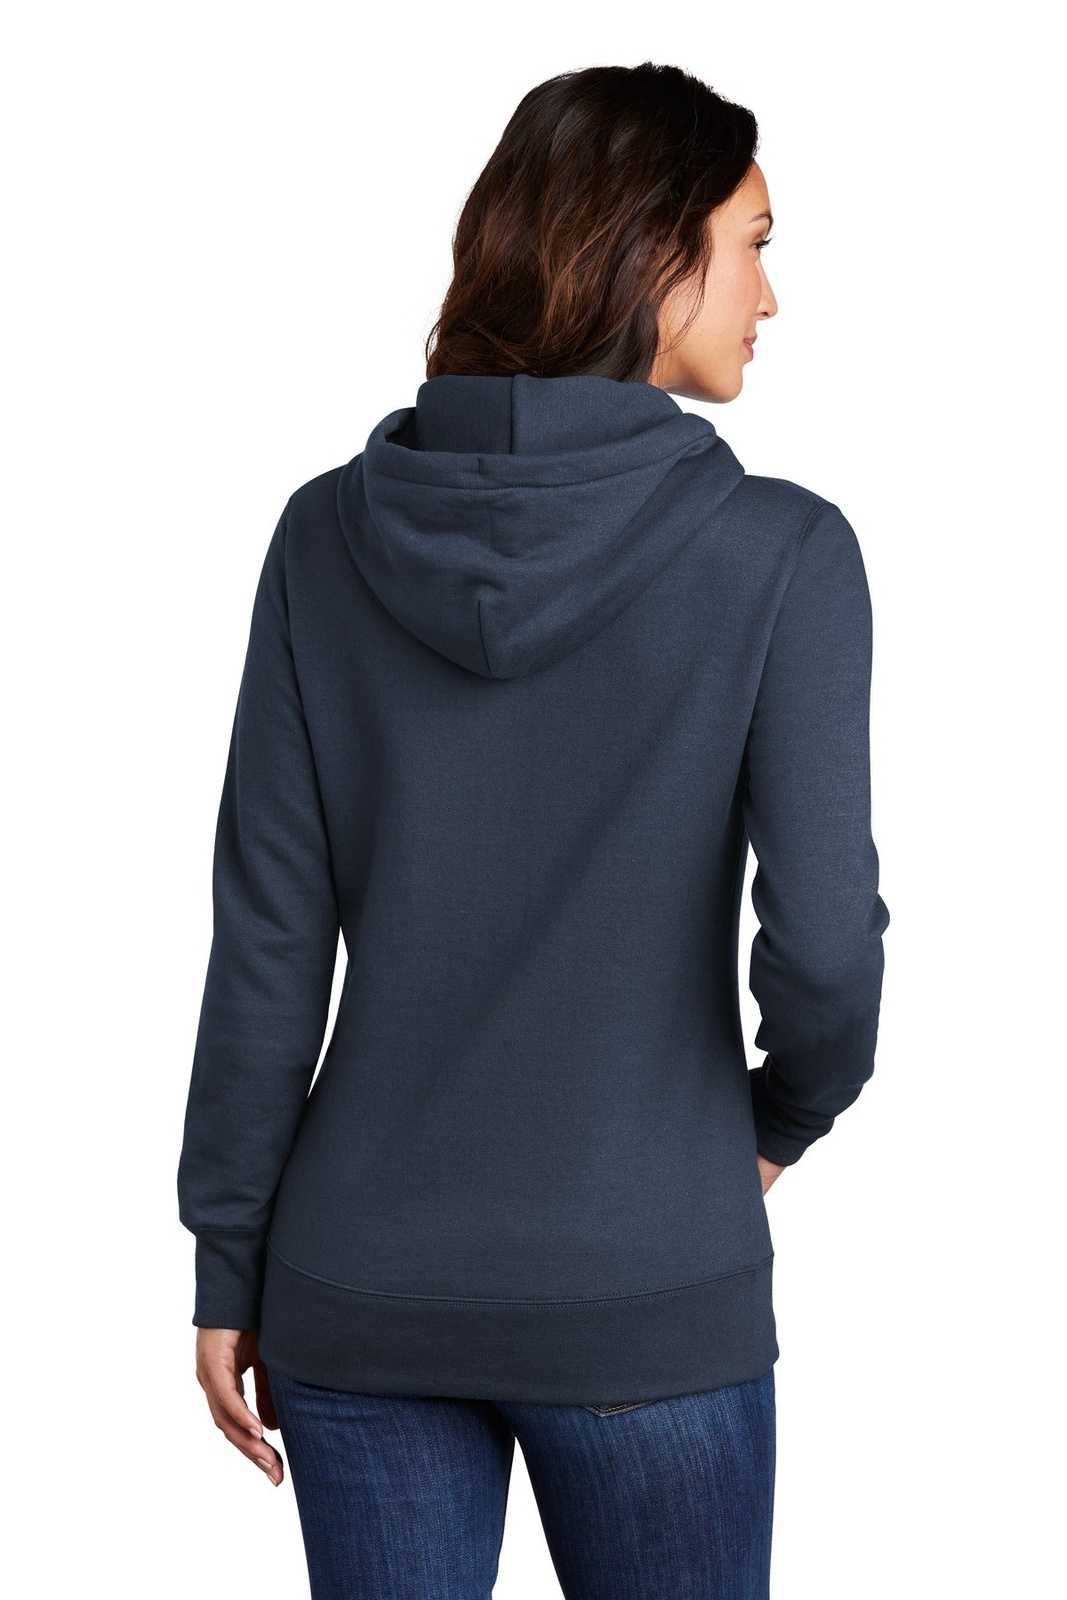 Port & Company LPC78H Ladies Core Fleece Pullover Hooded Sweatshirt - Navy - HIT a Double - 1